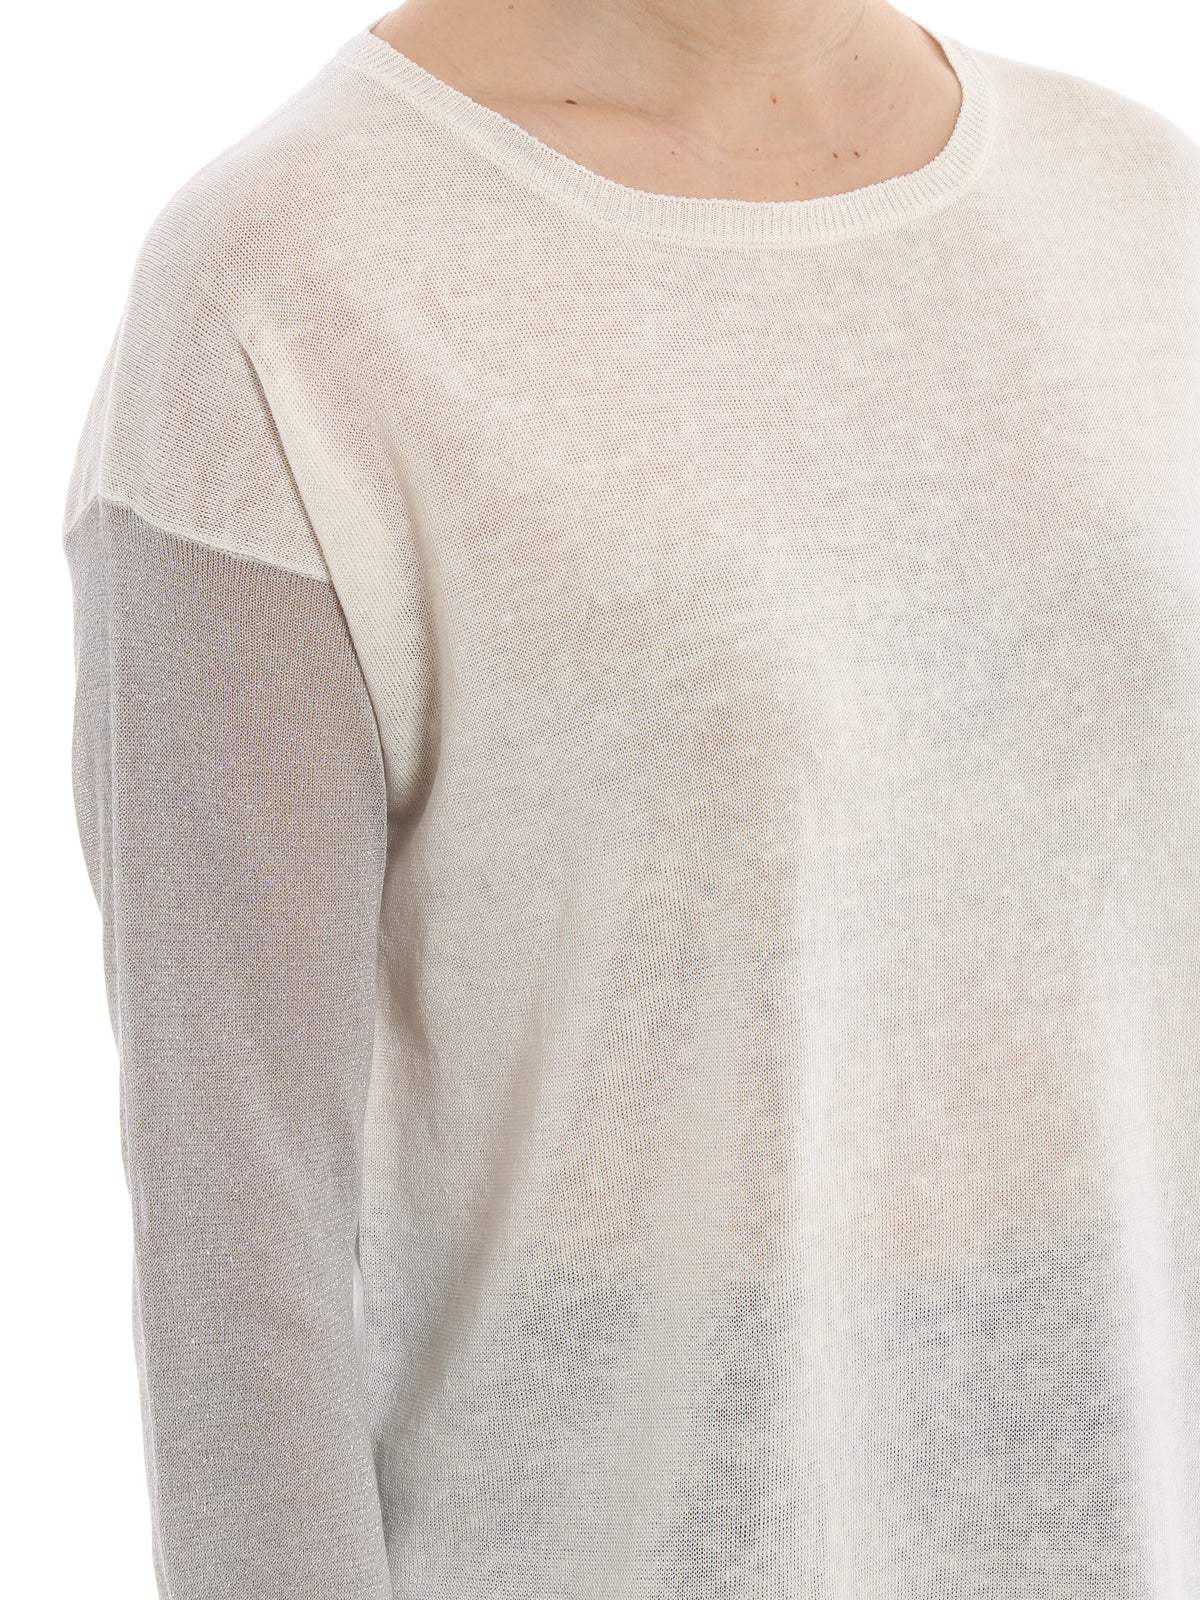 Fabiana Filippi Sleeve Shirt In Lurex White Woman-7